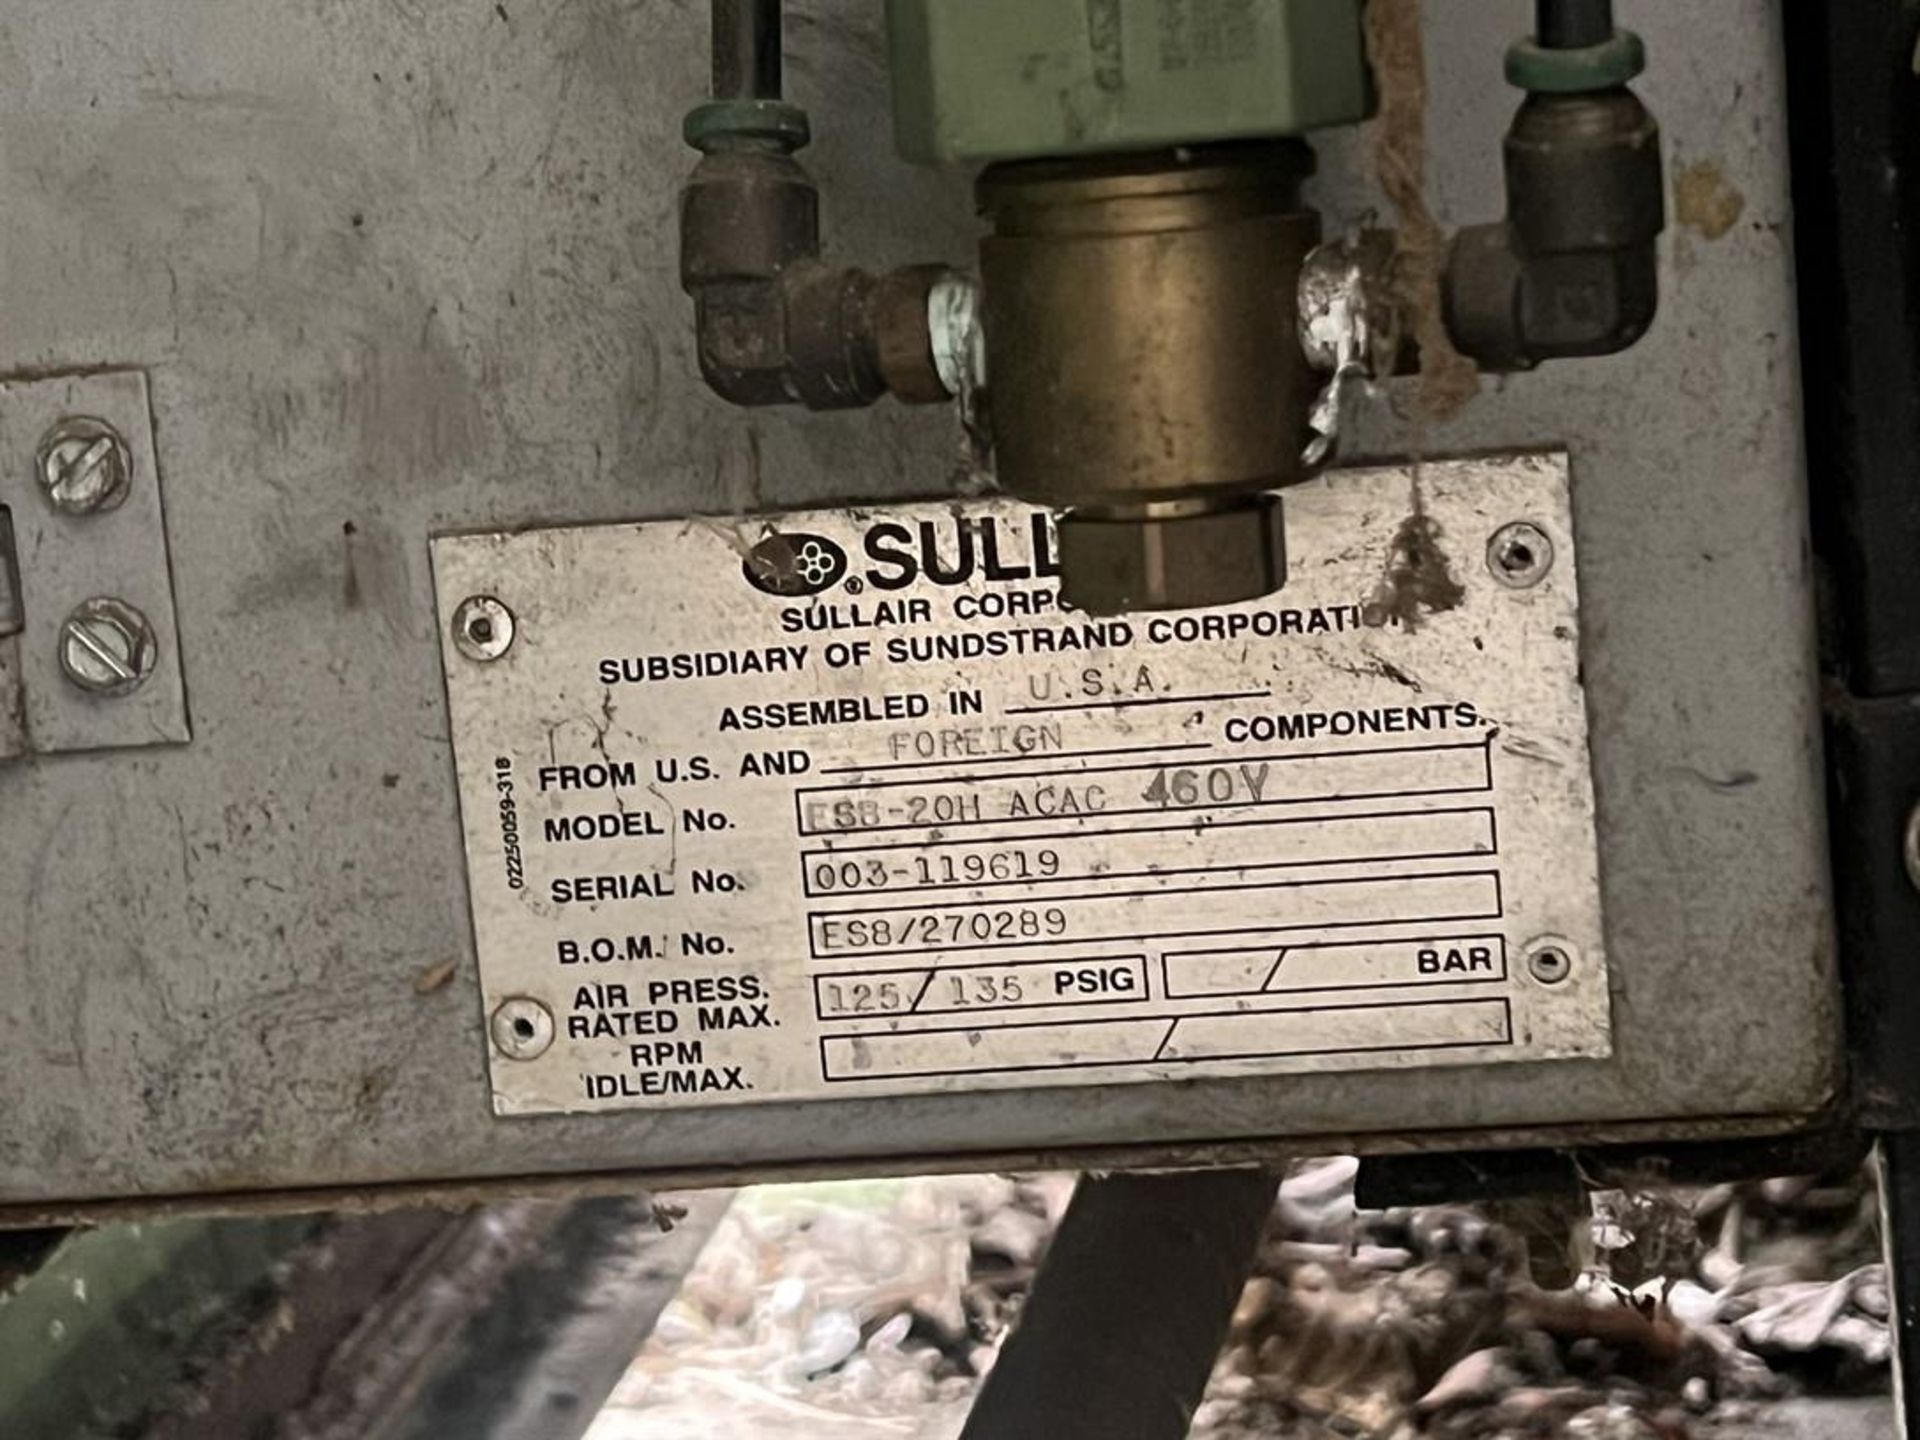 SULLAIR ES8-20H 20 HP Air Compressor, s/n 003-119619, 125/135 PSIG - Image 3 of 4